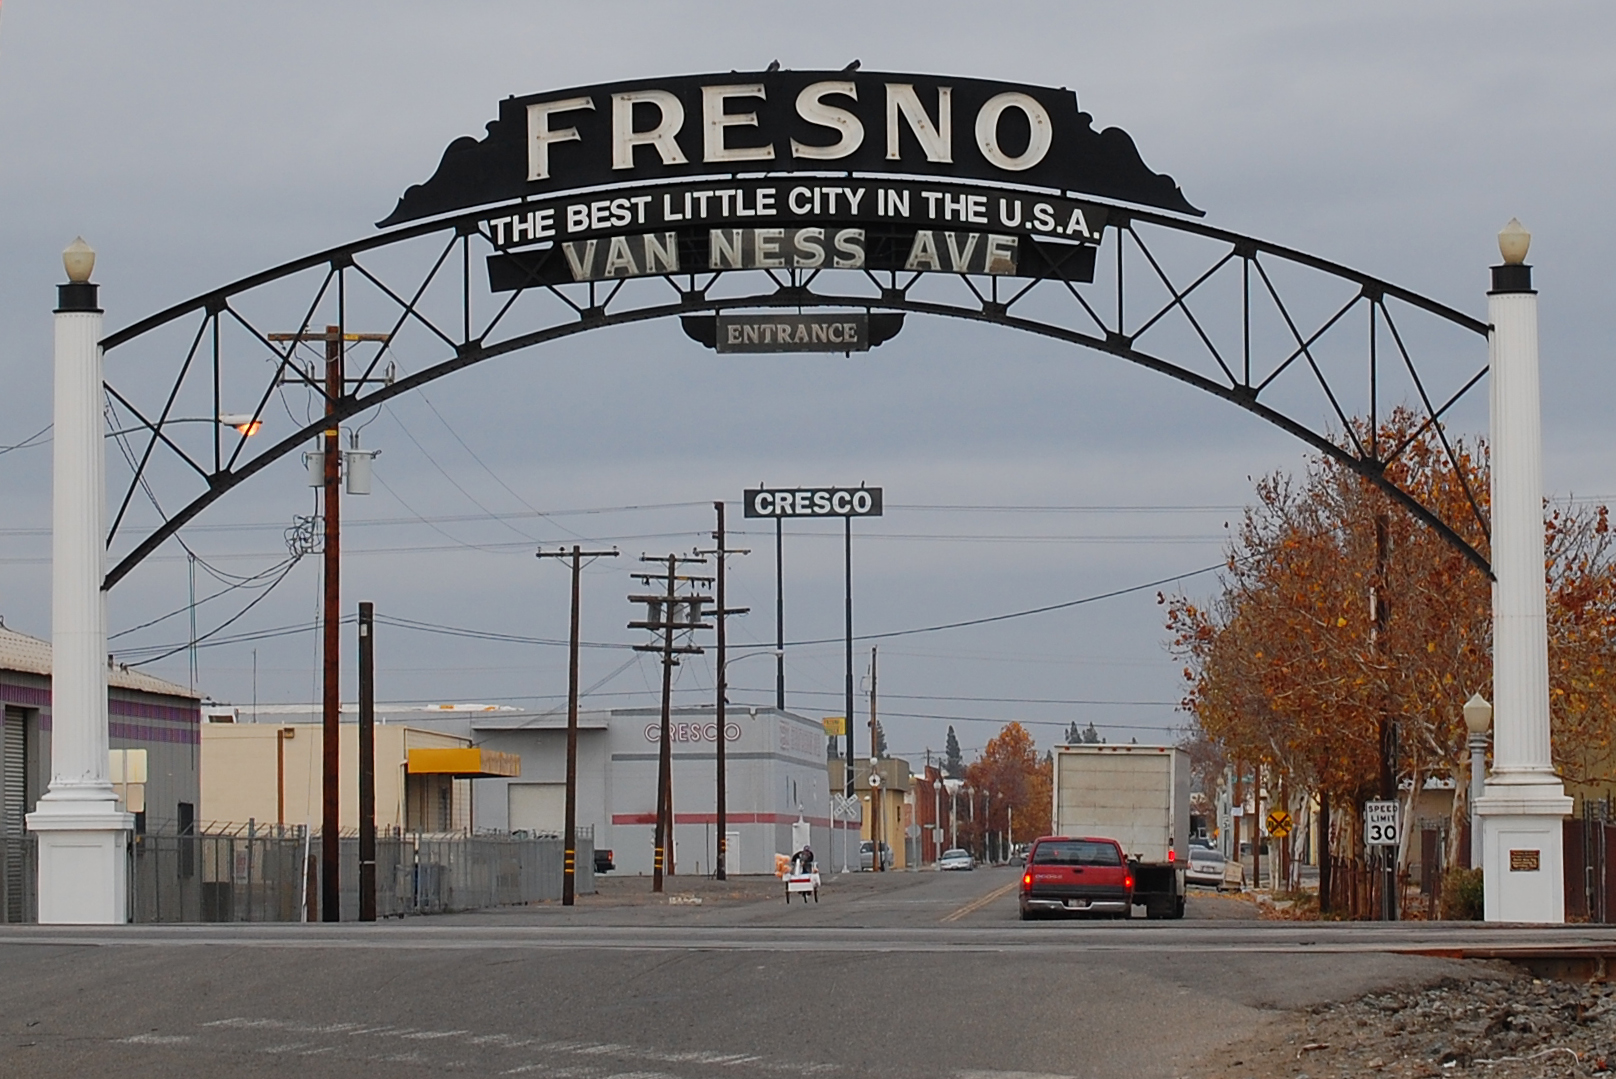 Fresno: Travels with Josh